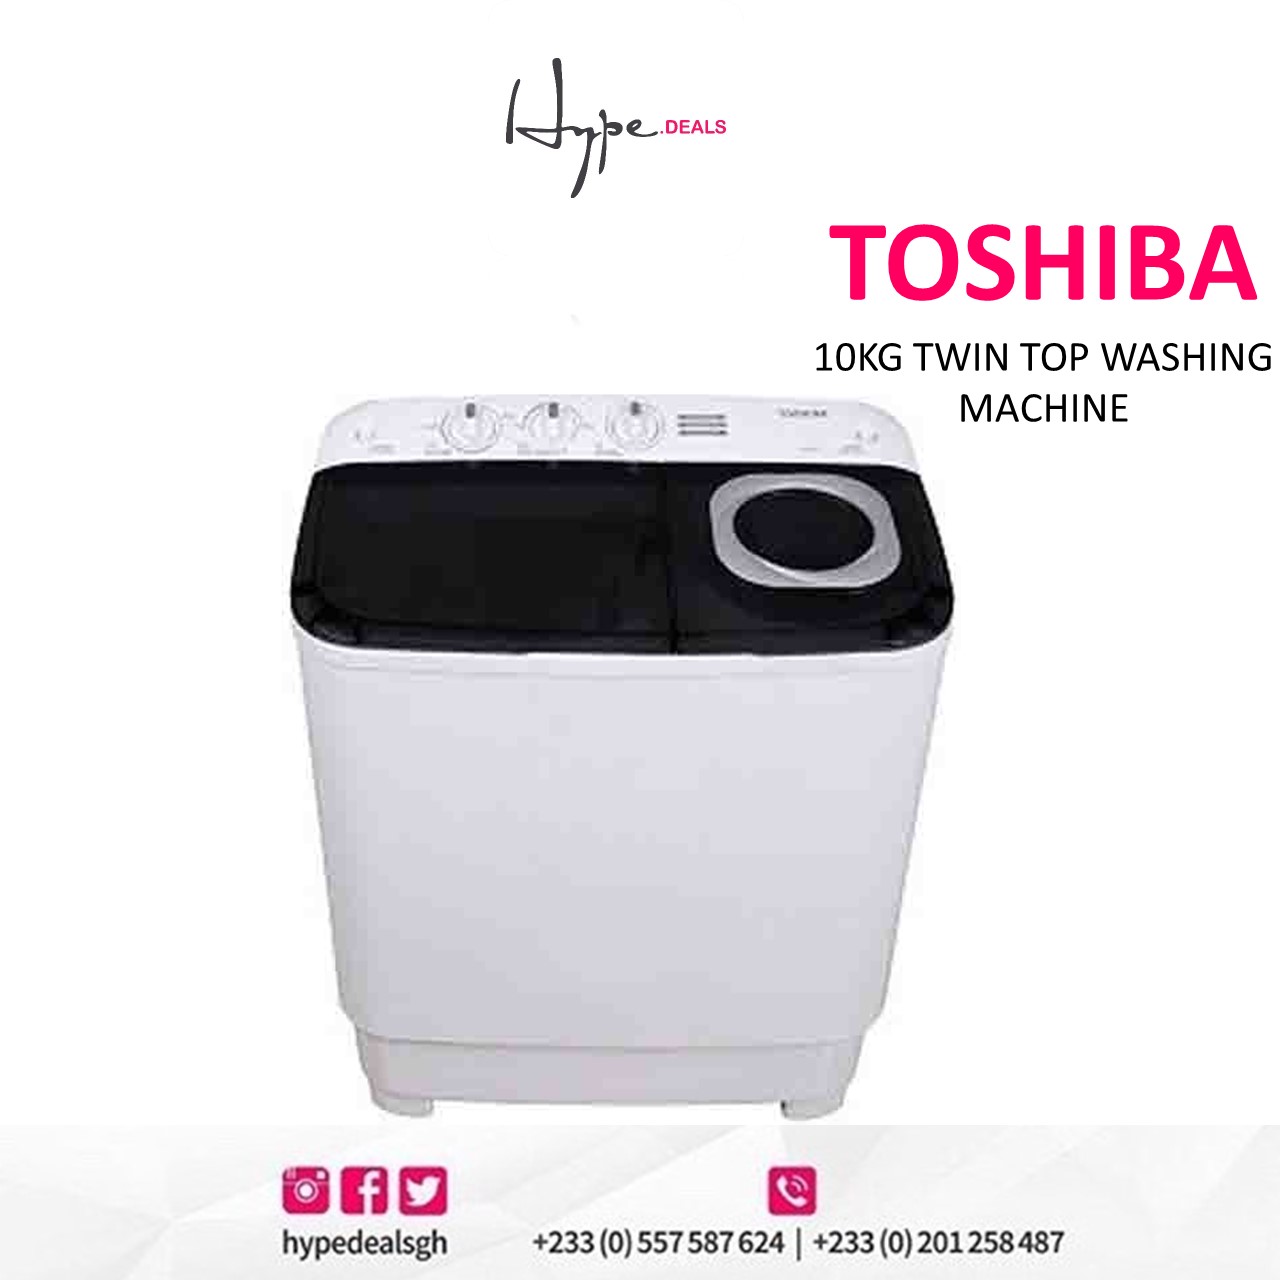 Toshiba Washing Machine In Ghana For Sale | Reapp Gh